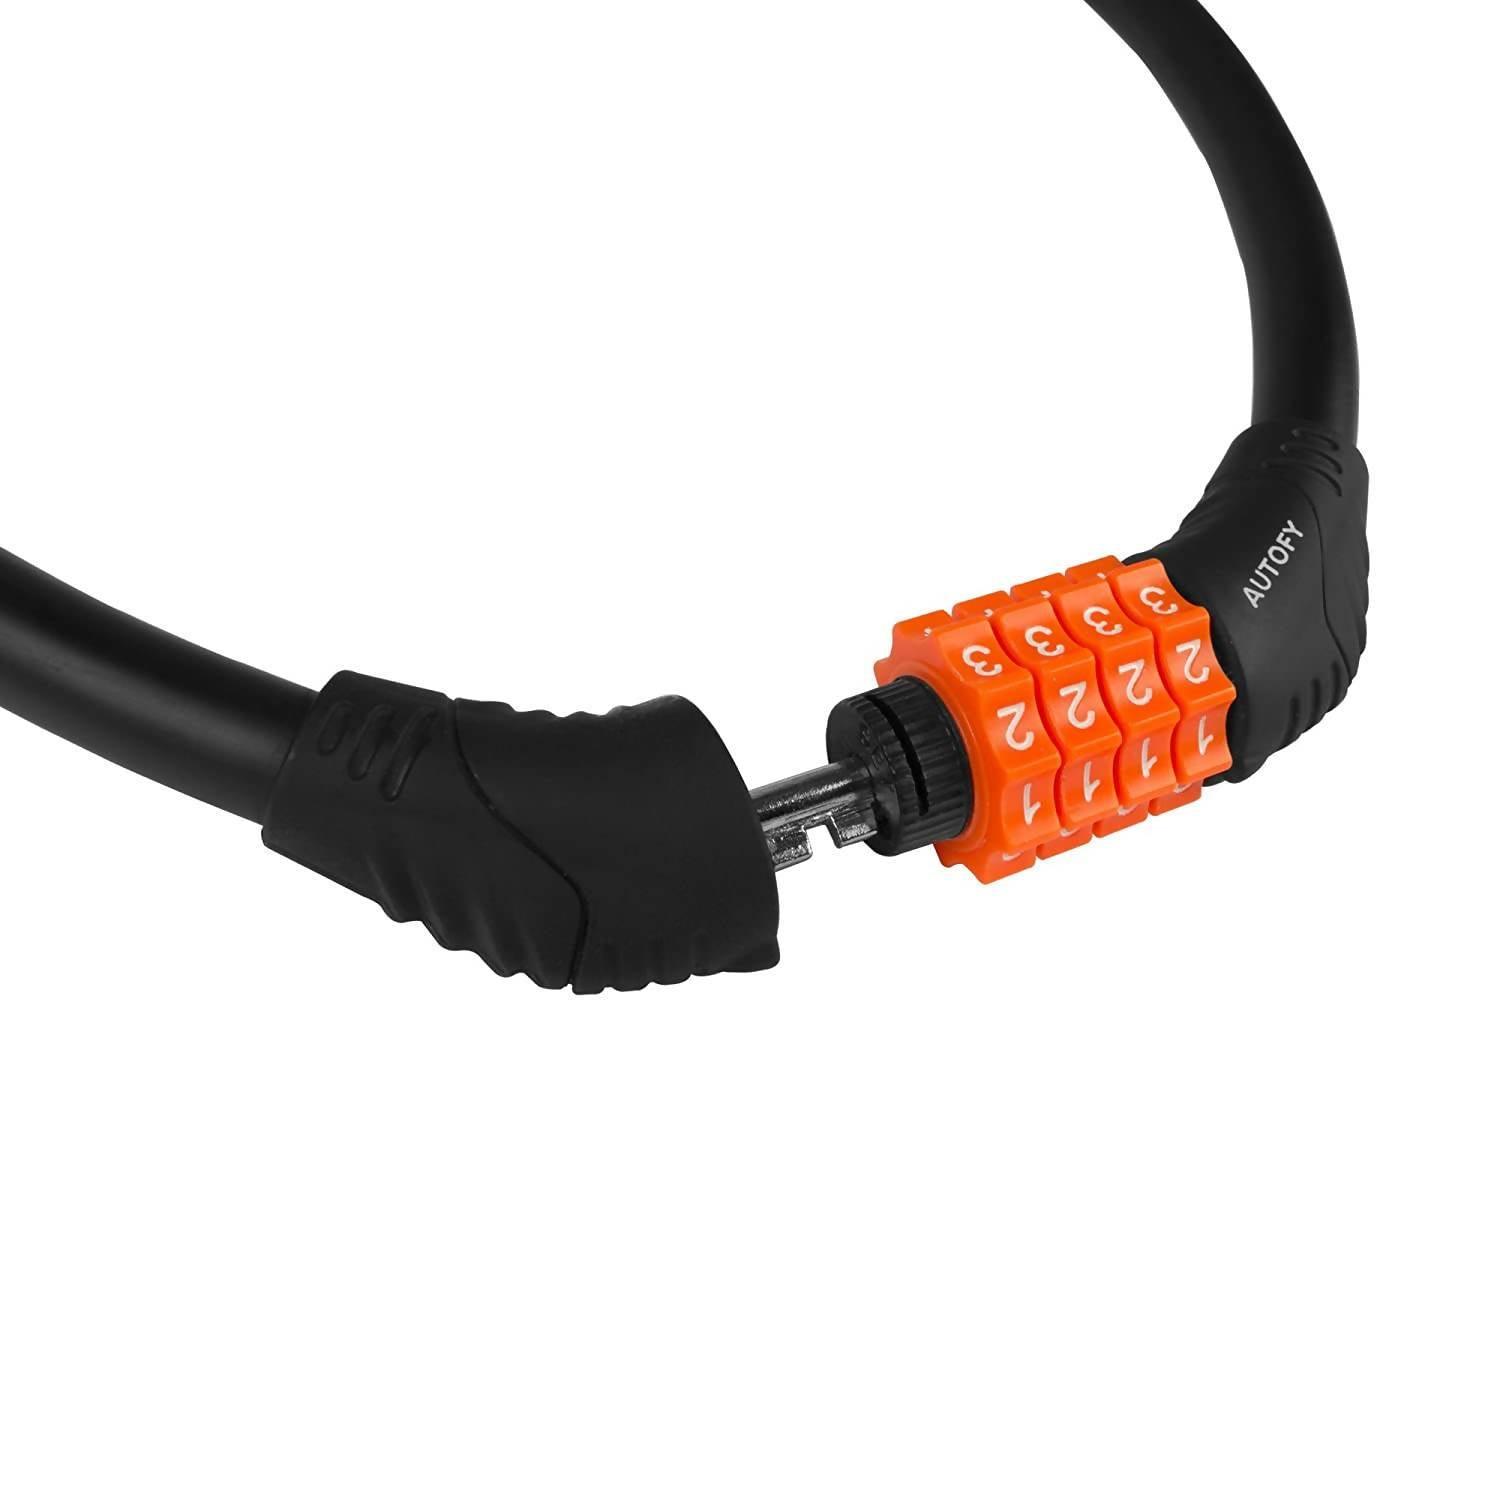 4 Digits Universal Multi Purpose Steel Cable (Black and Orange)